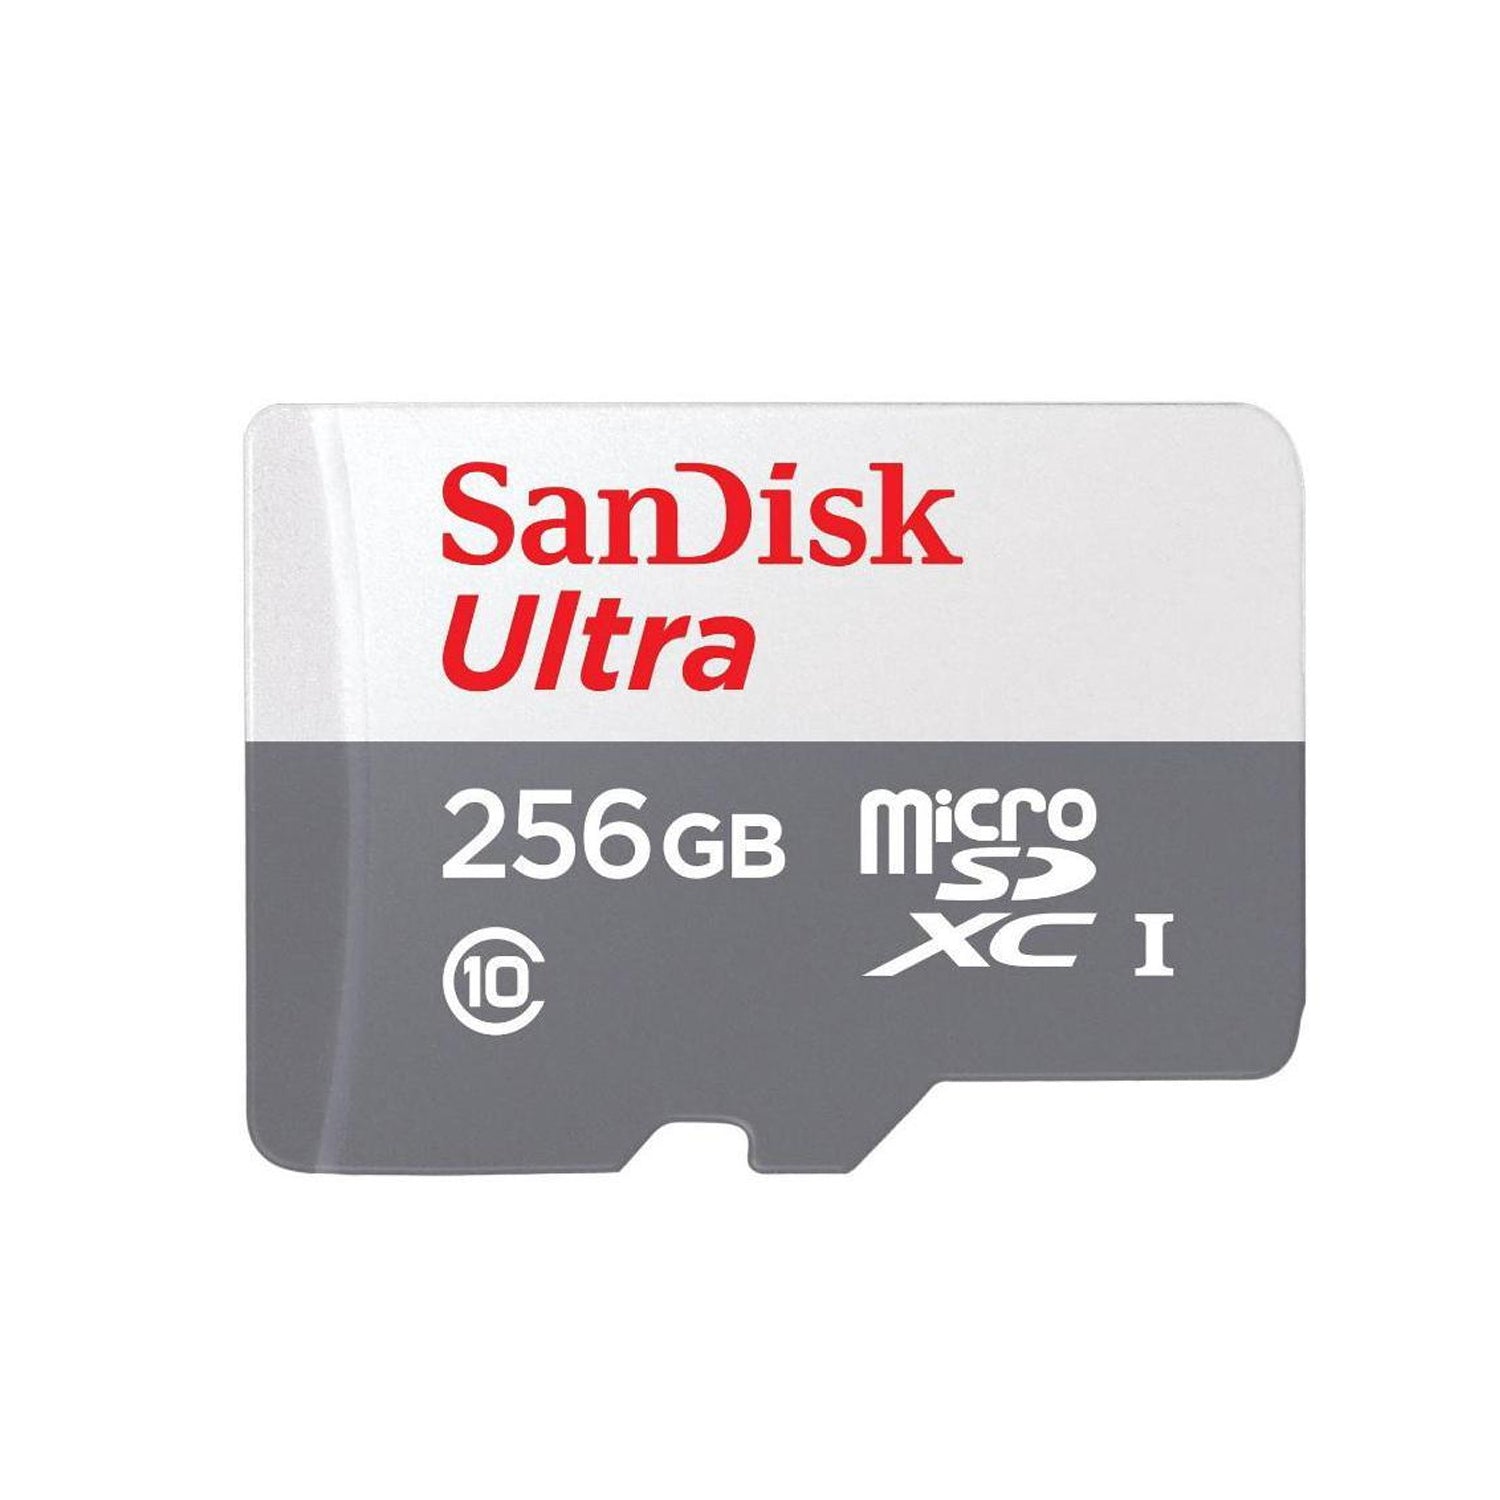 Sandisk 256GB Ultra microSDXC CLASS 10 100MB/s Memory Card (SDSQUNR-256G-GN3MN)